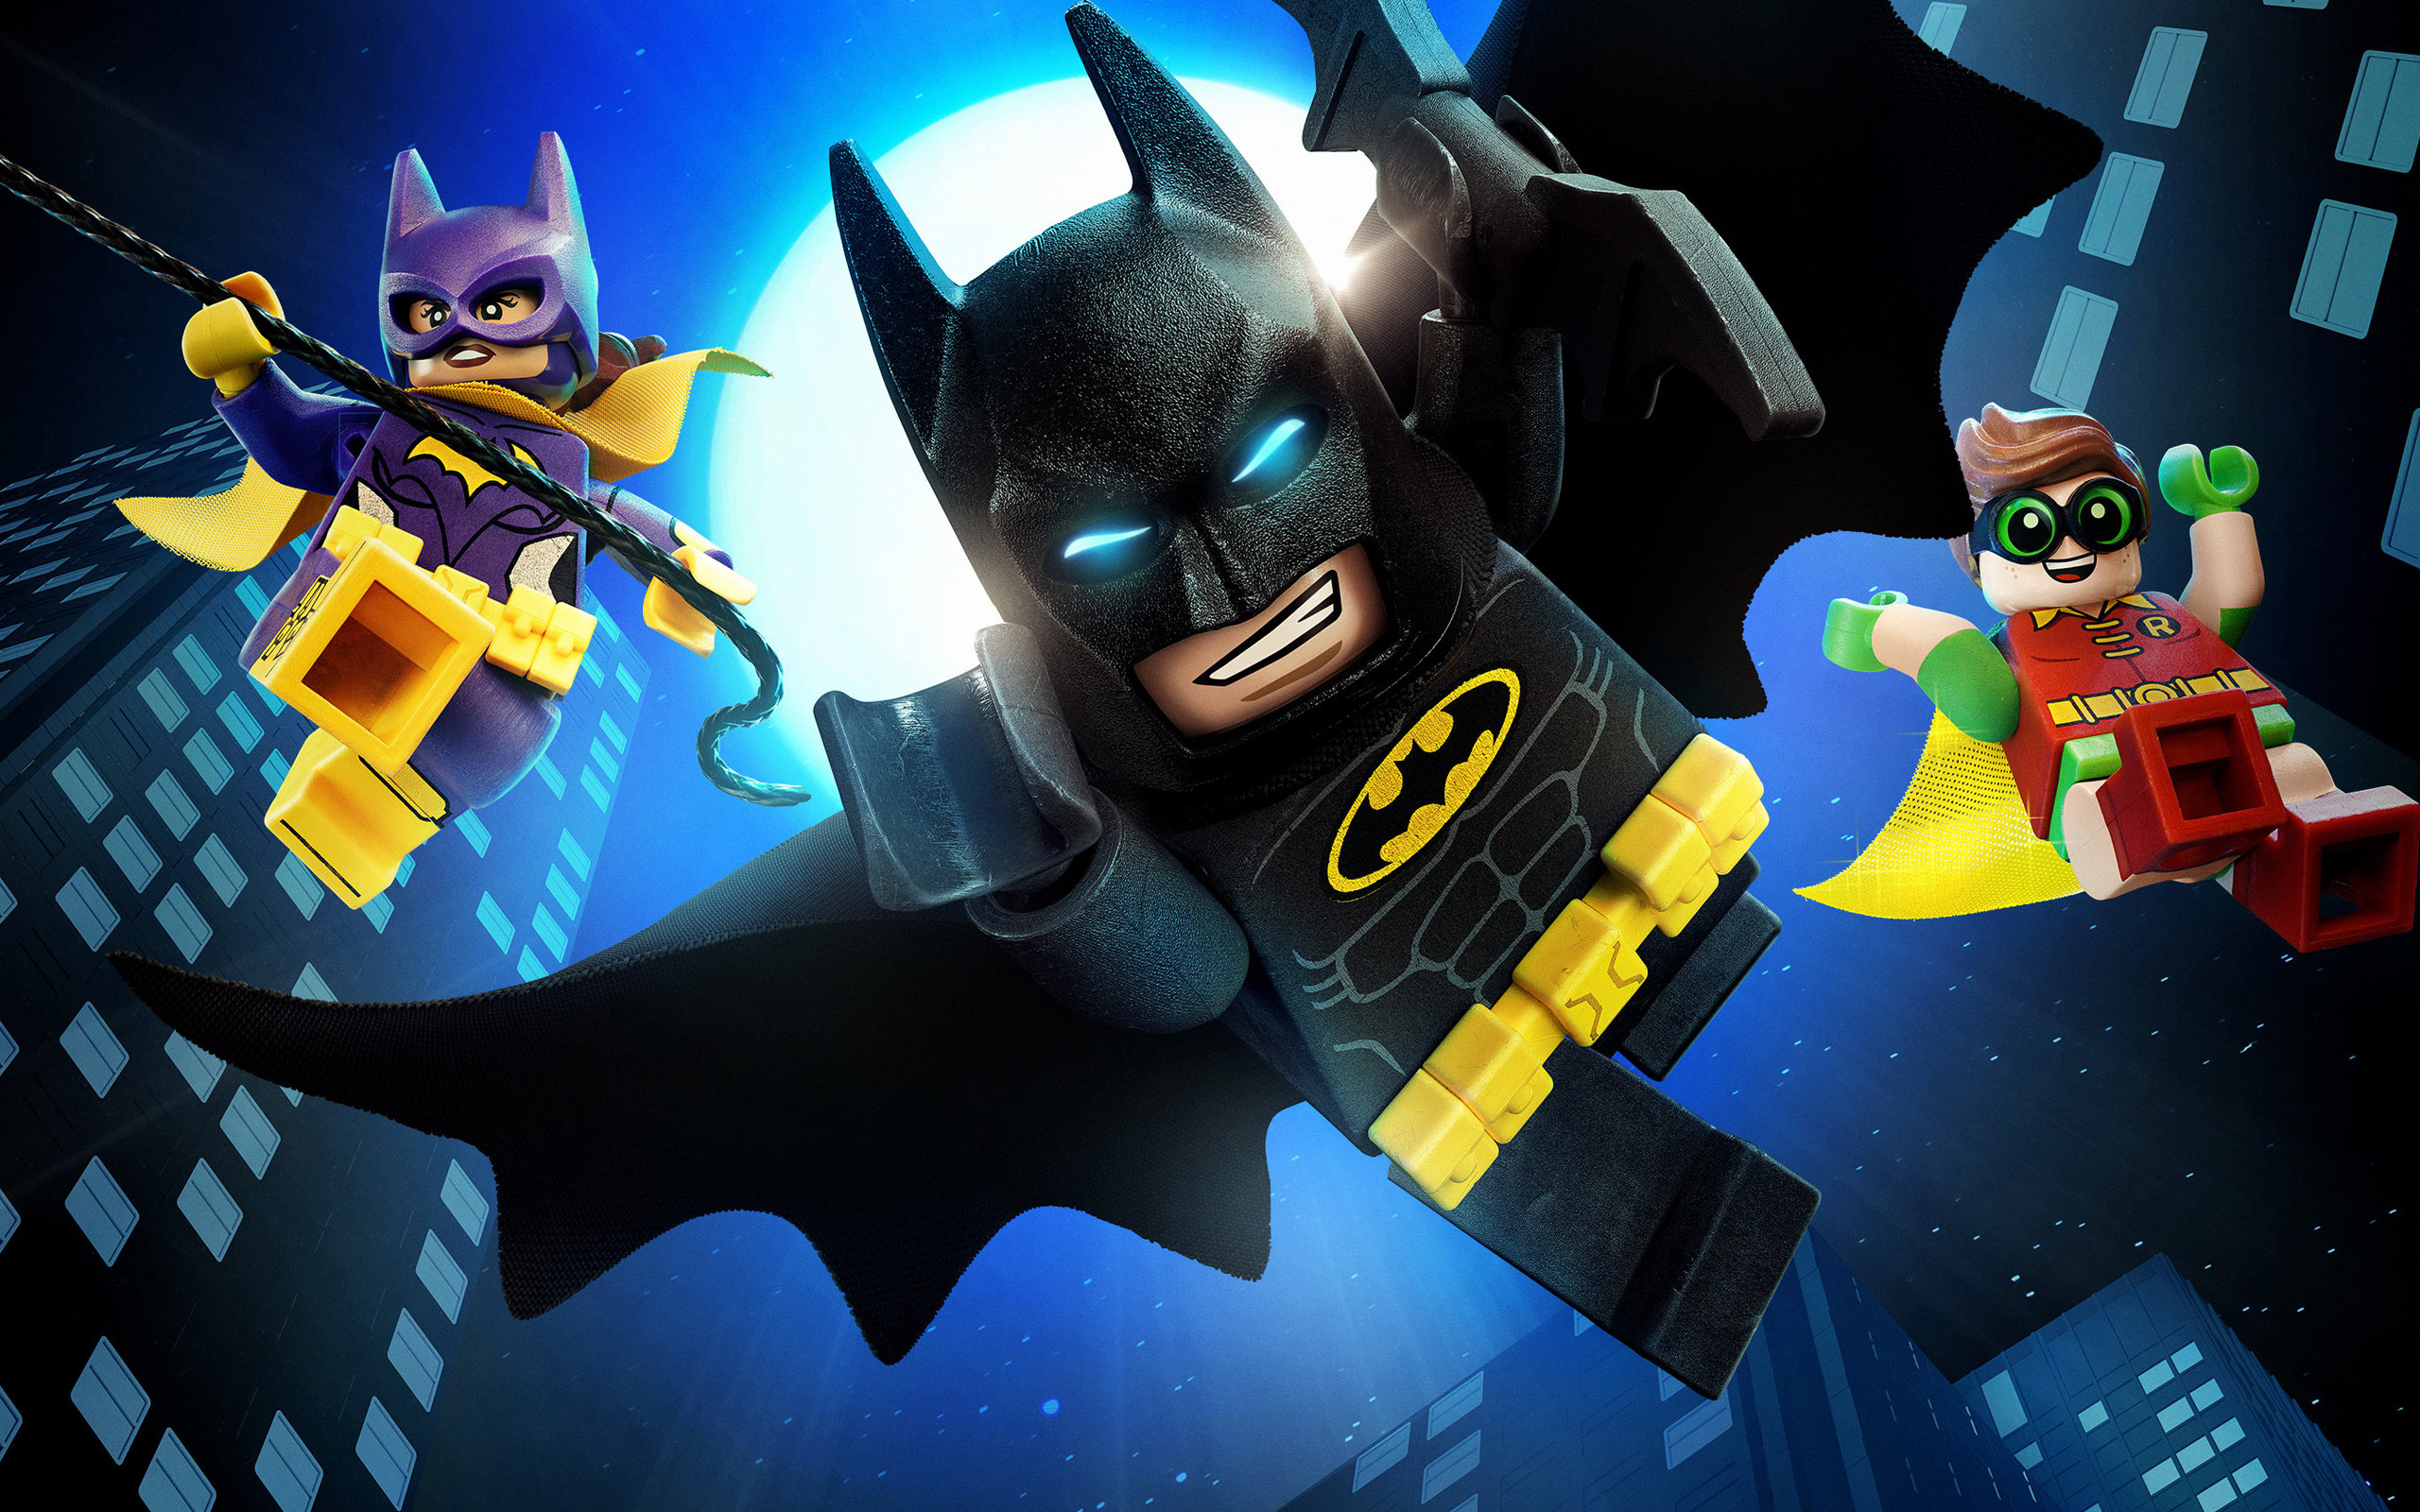 2560x1600 The LEGO Batman Movie wallpaper free | The LEGO Batman Movie wallpapers hd  | Pinterest | Lego batman movie, Movie wallpapers and Lego batman